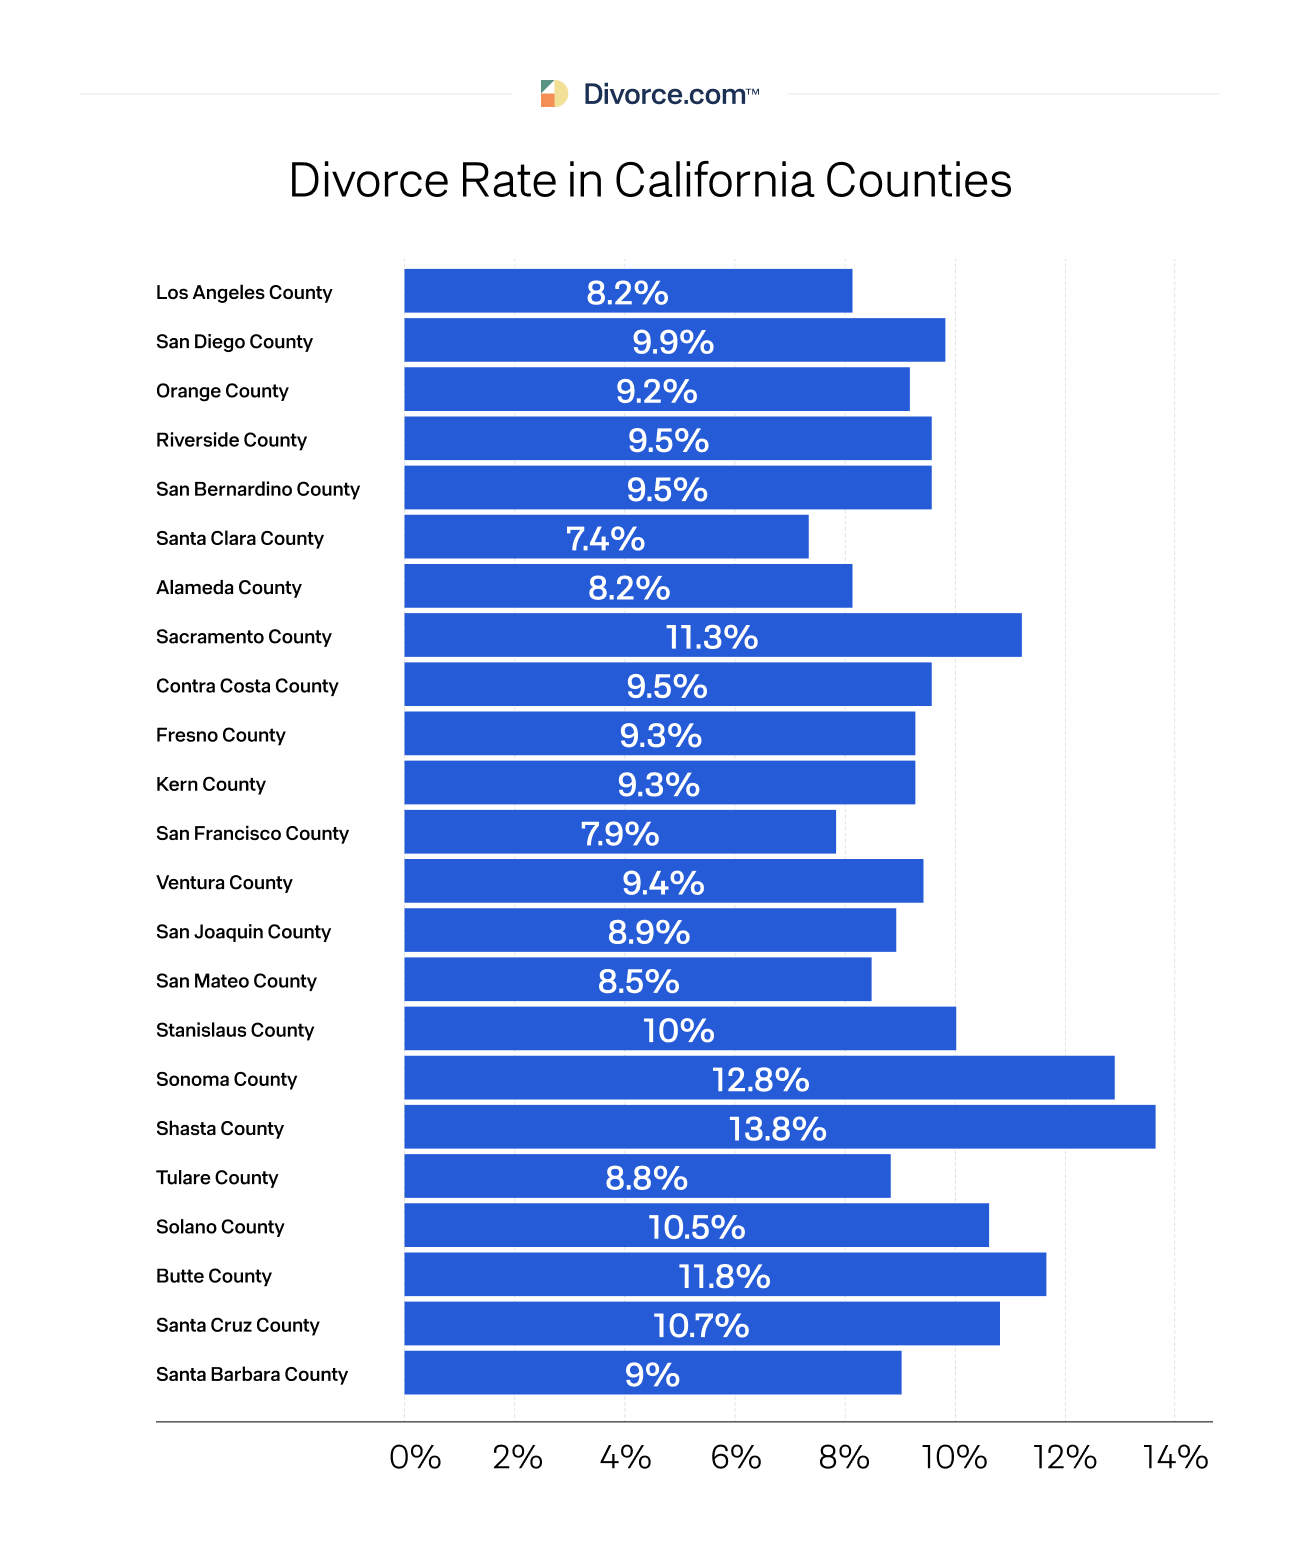 Divorce Rate in California Counties